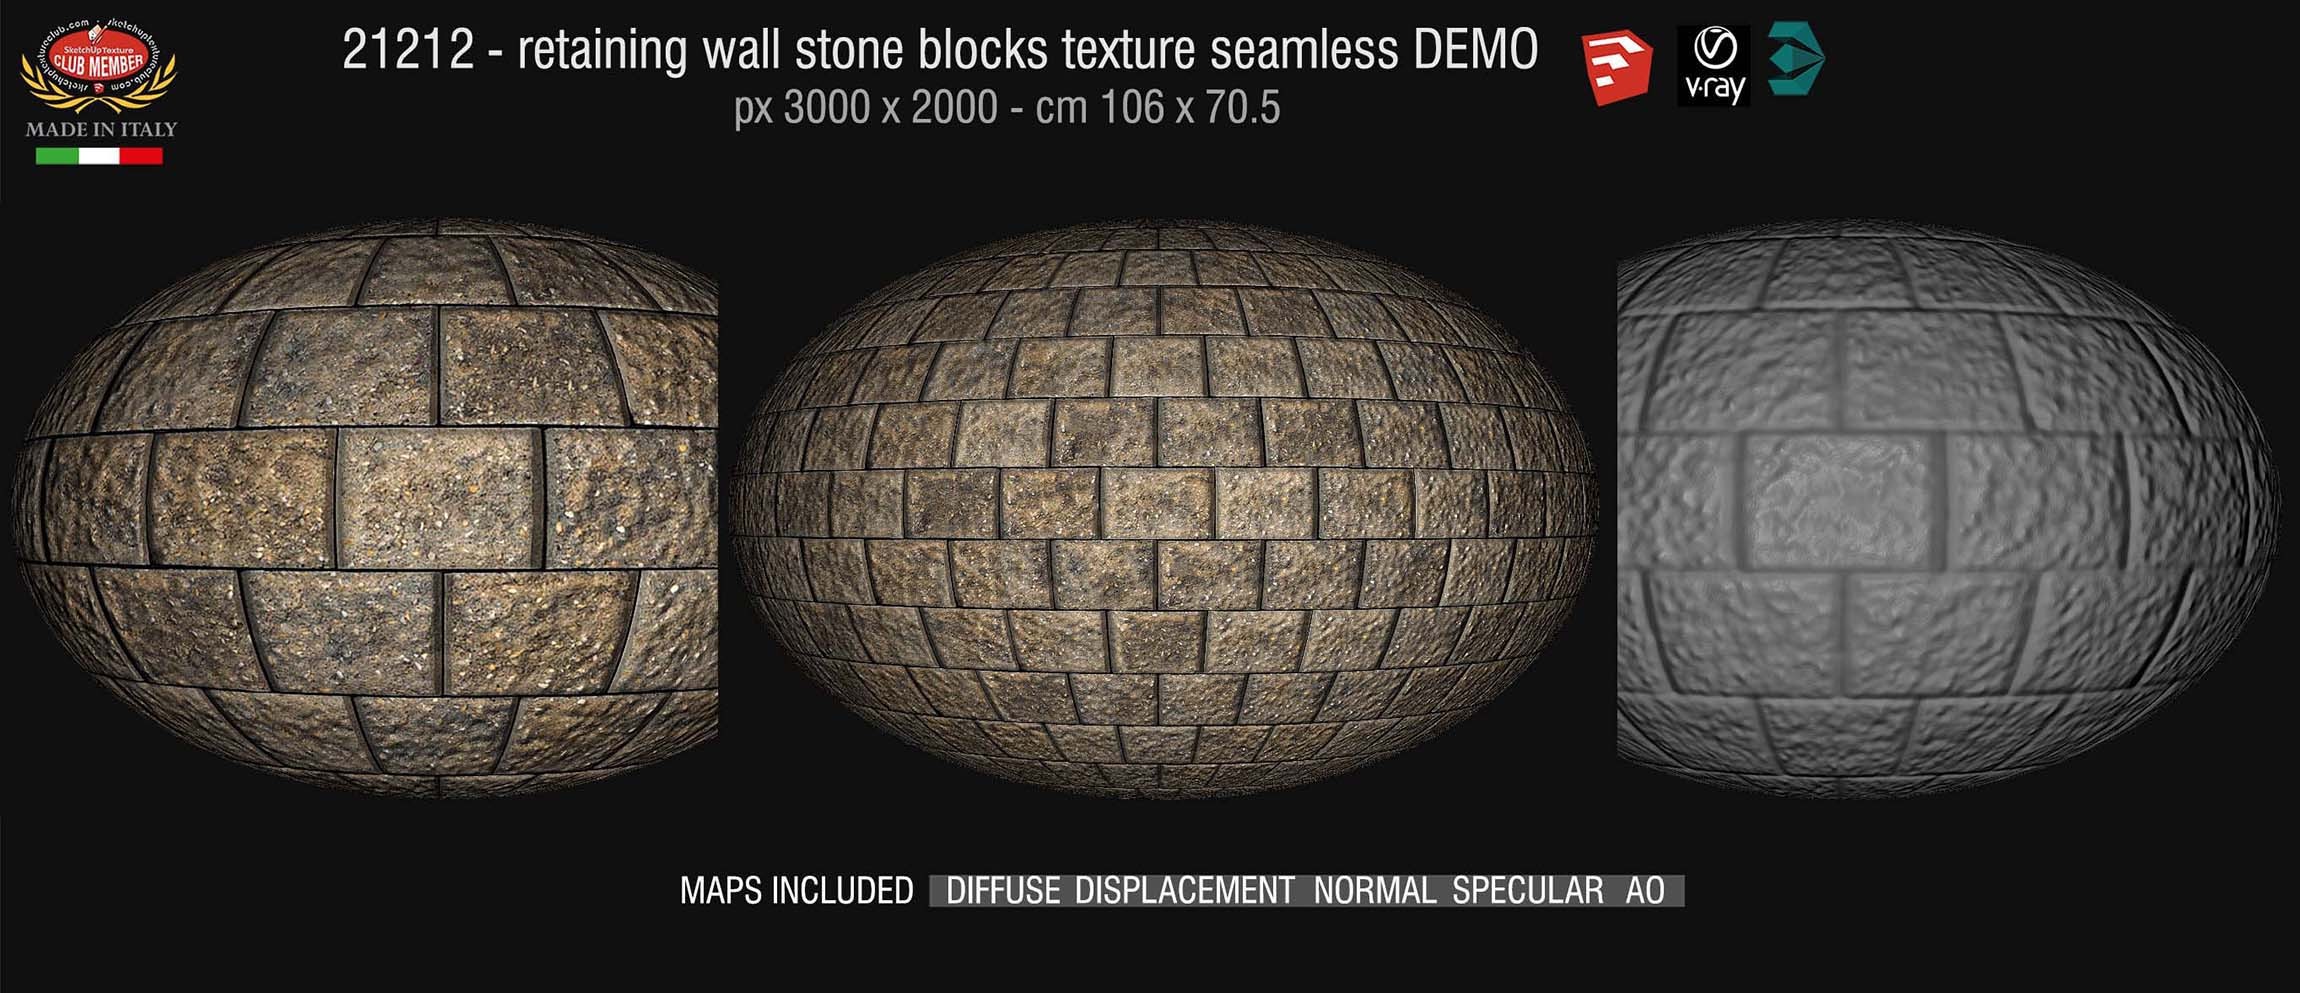 21212 HR Retaining wall stone blocks texture + maps DEMO